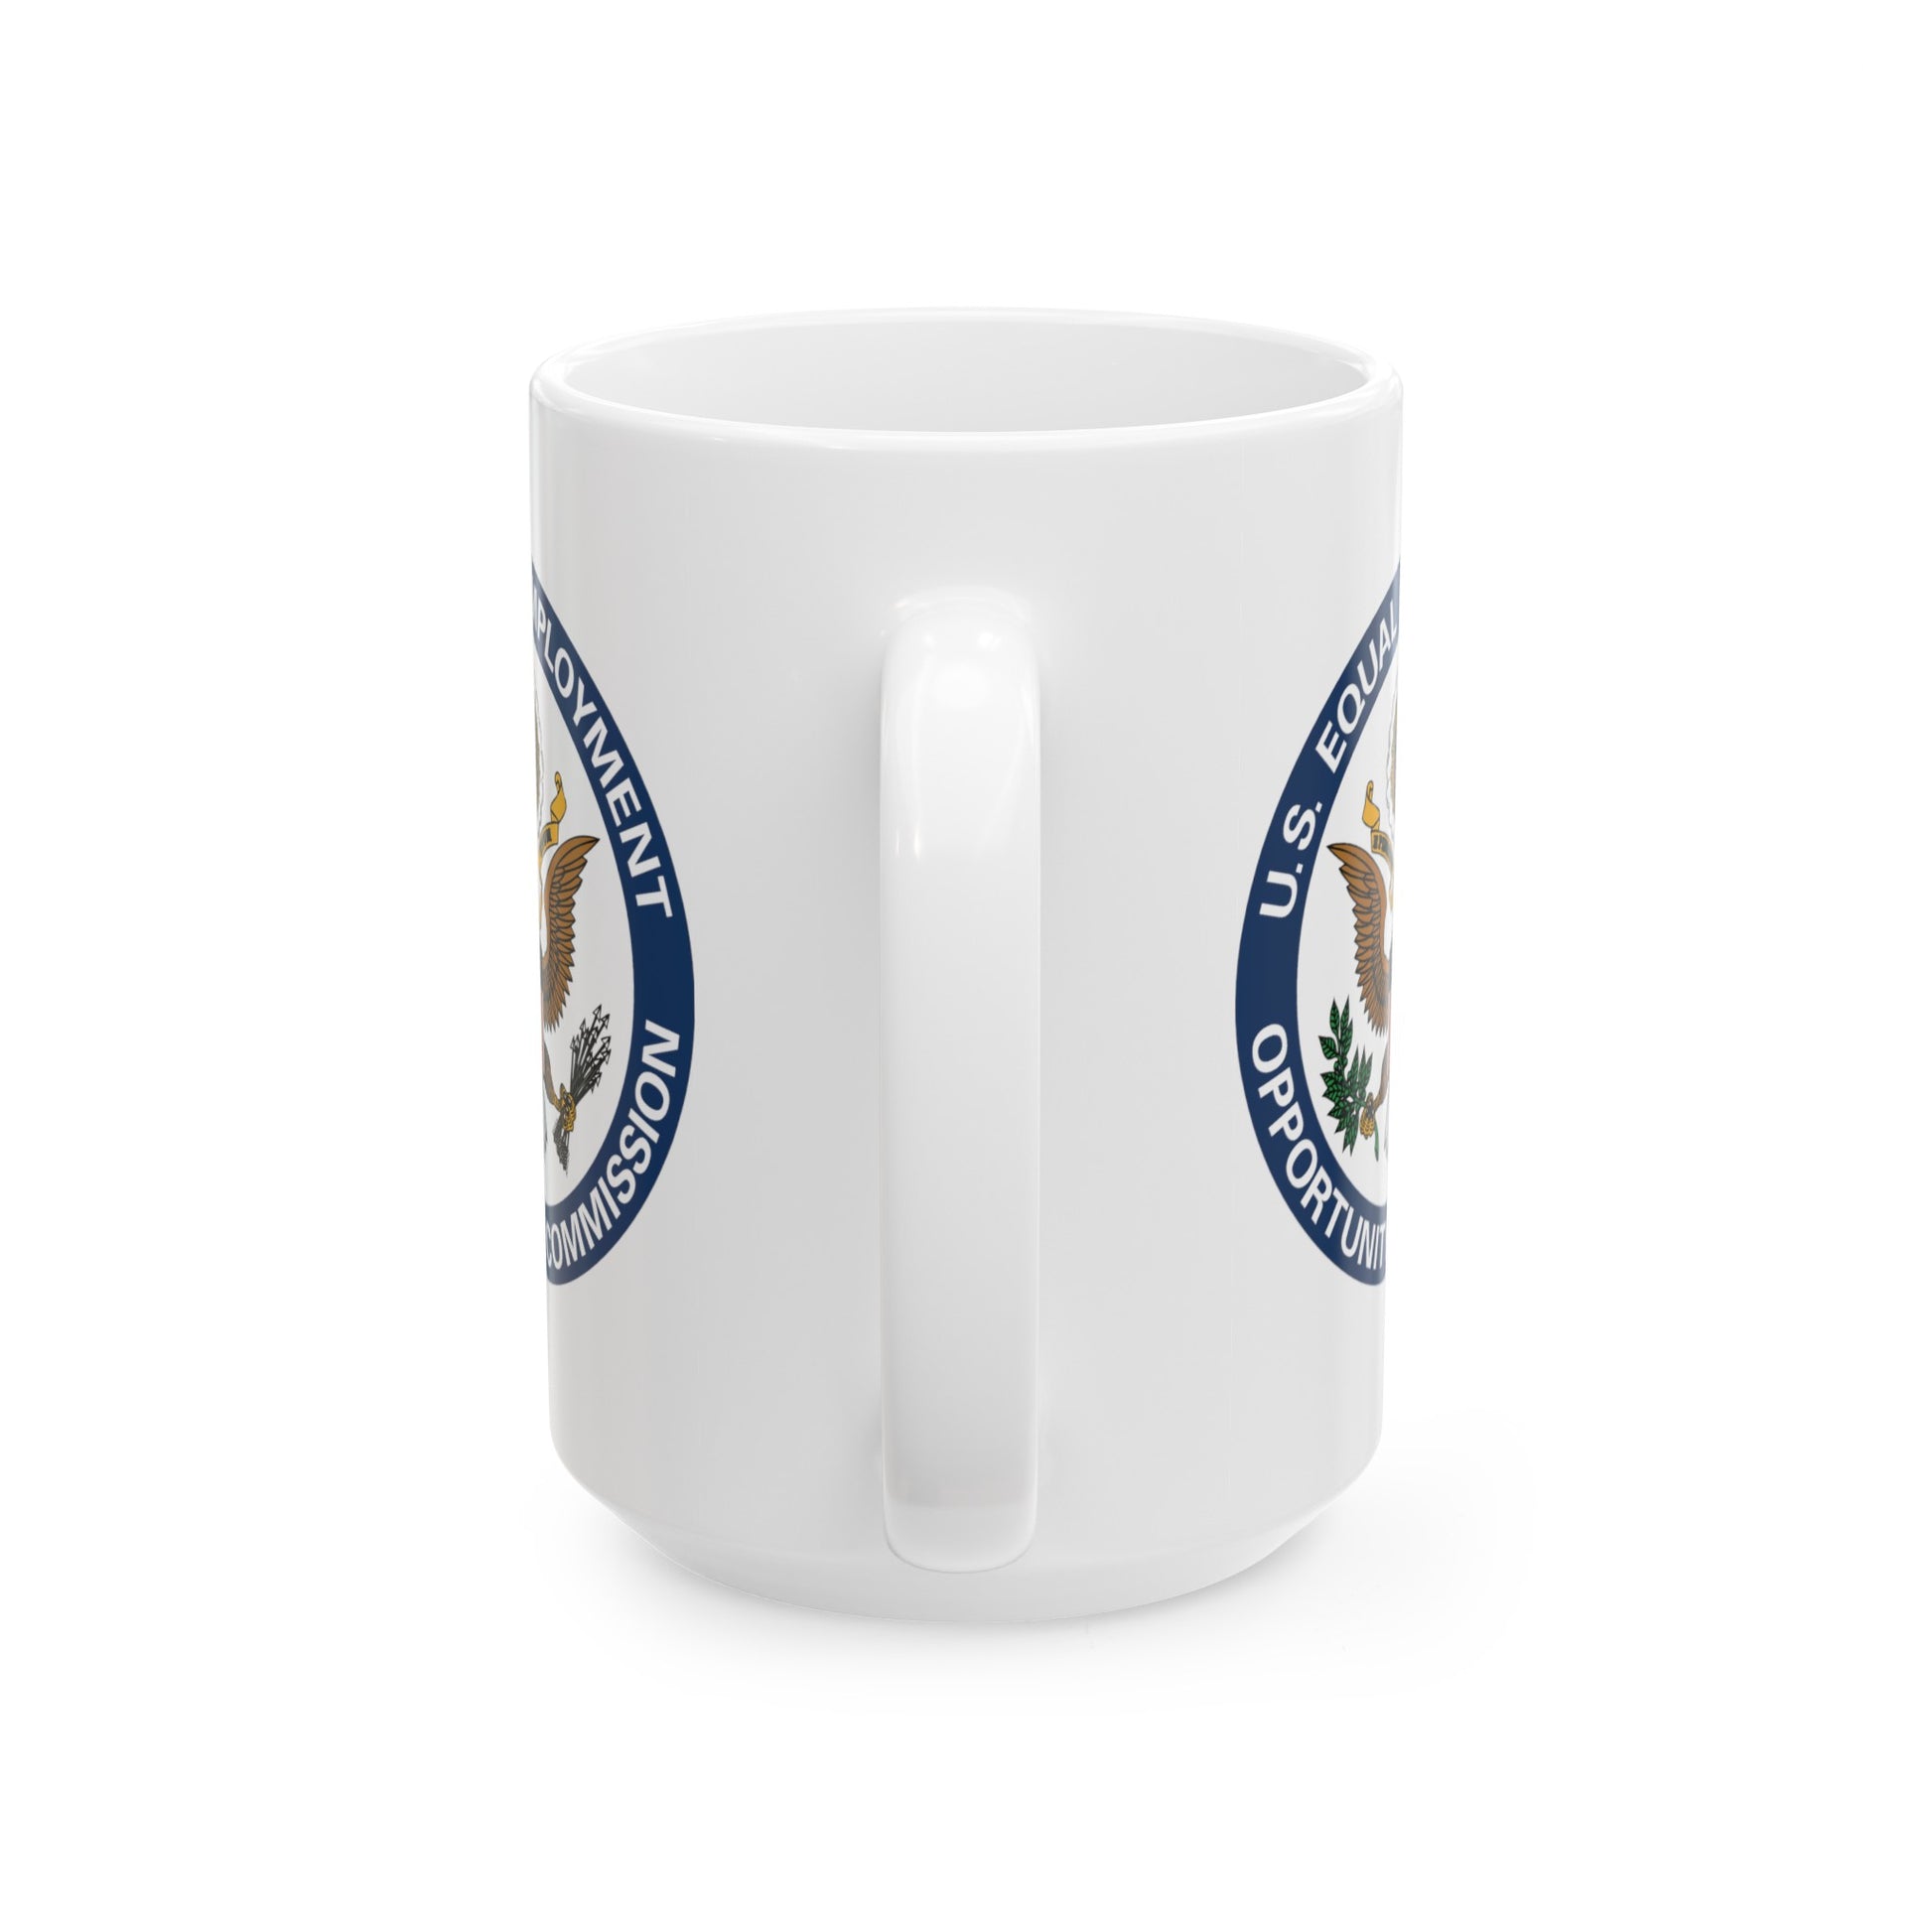 US EEOC Coffee Mug - Double Sided White Ceramic 15oz by TheGlassyLass